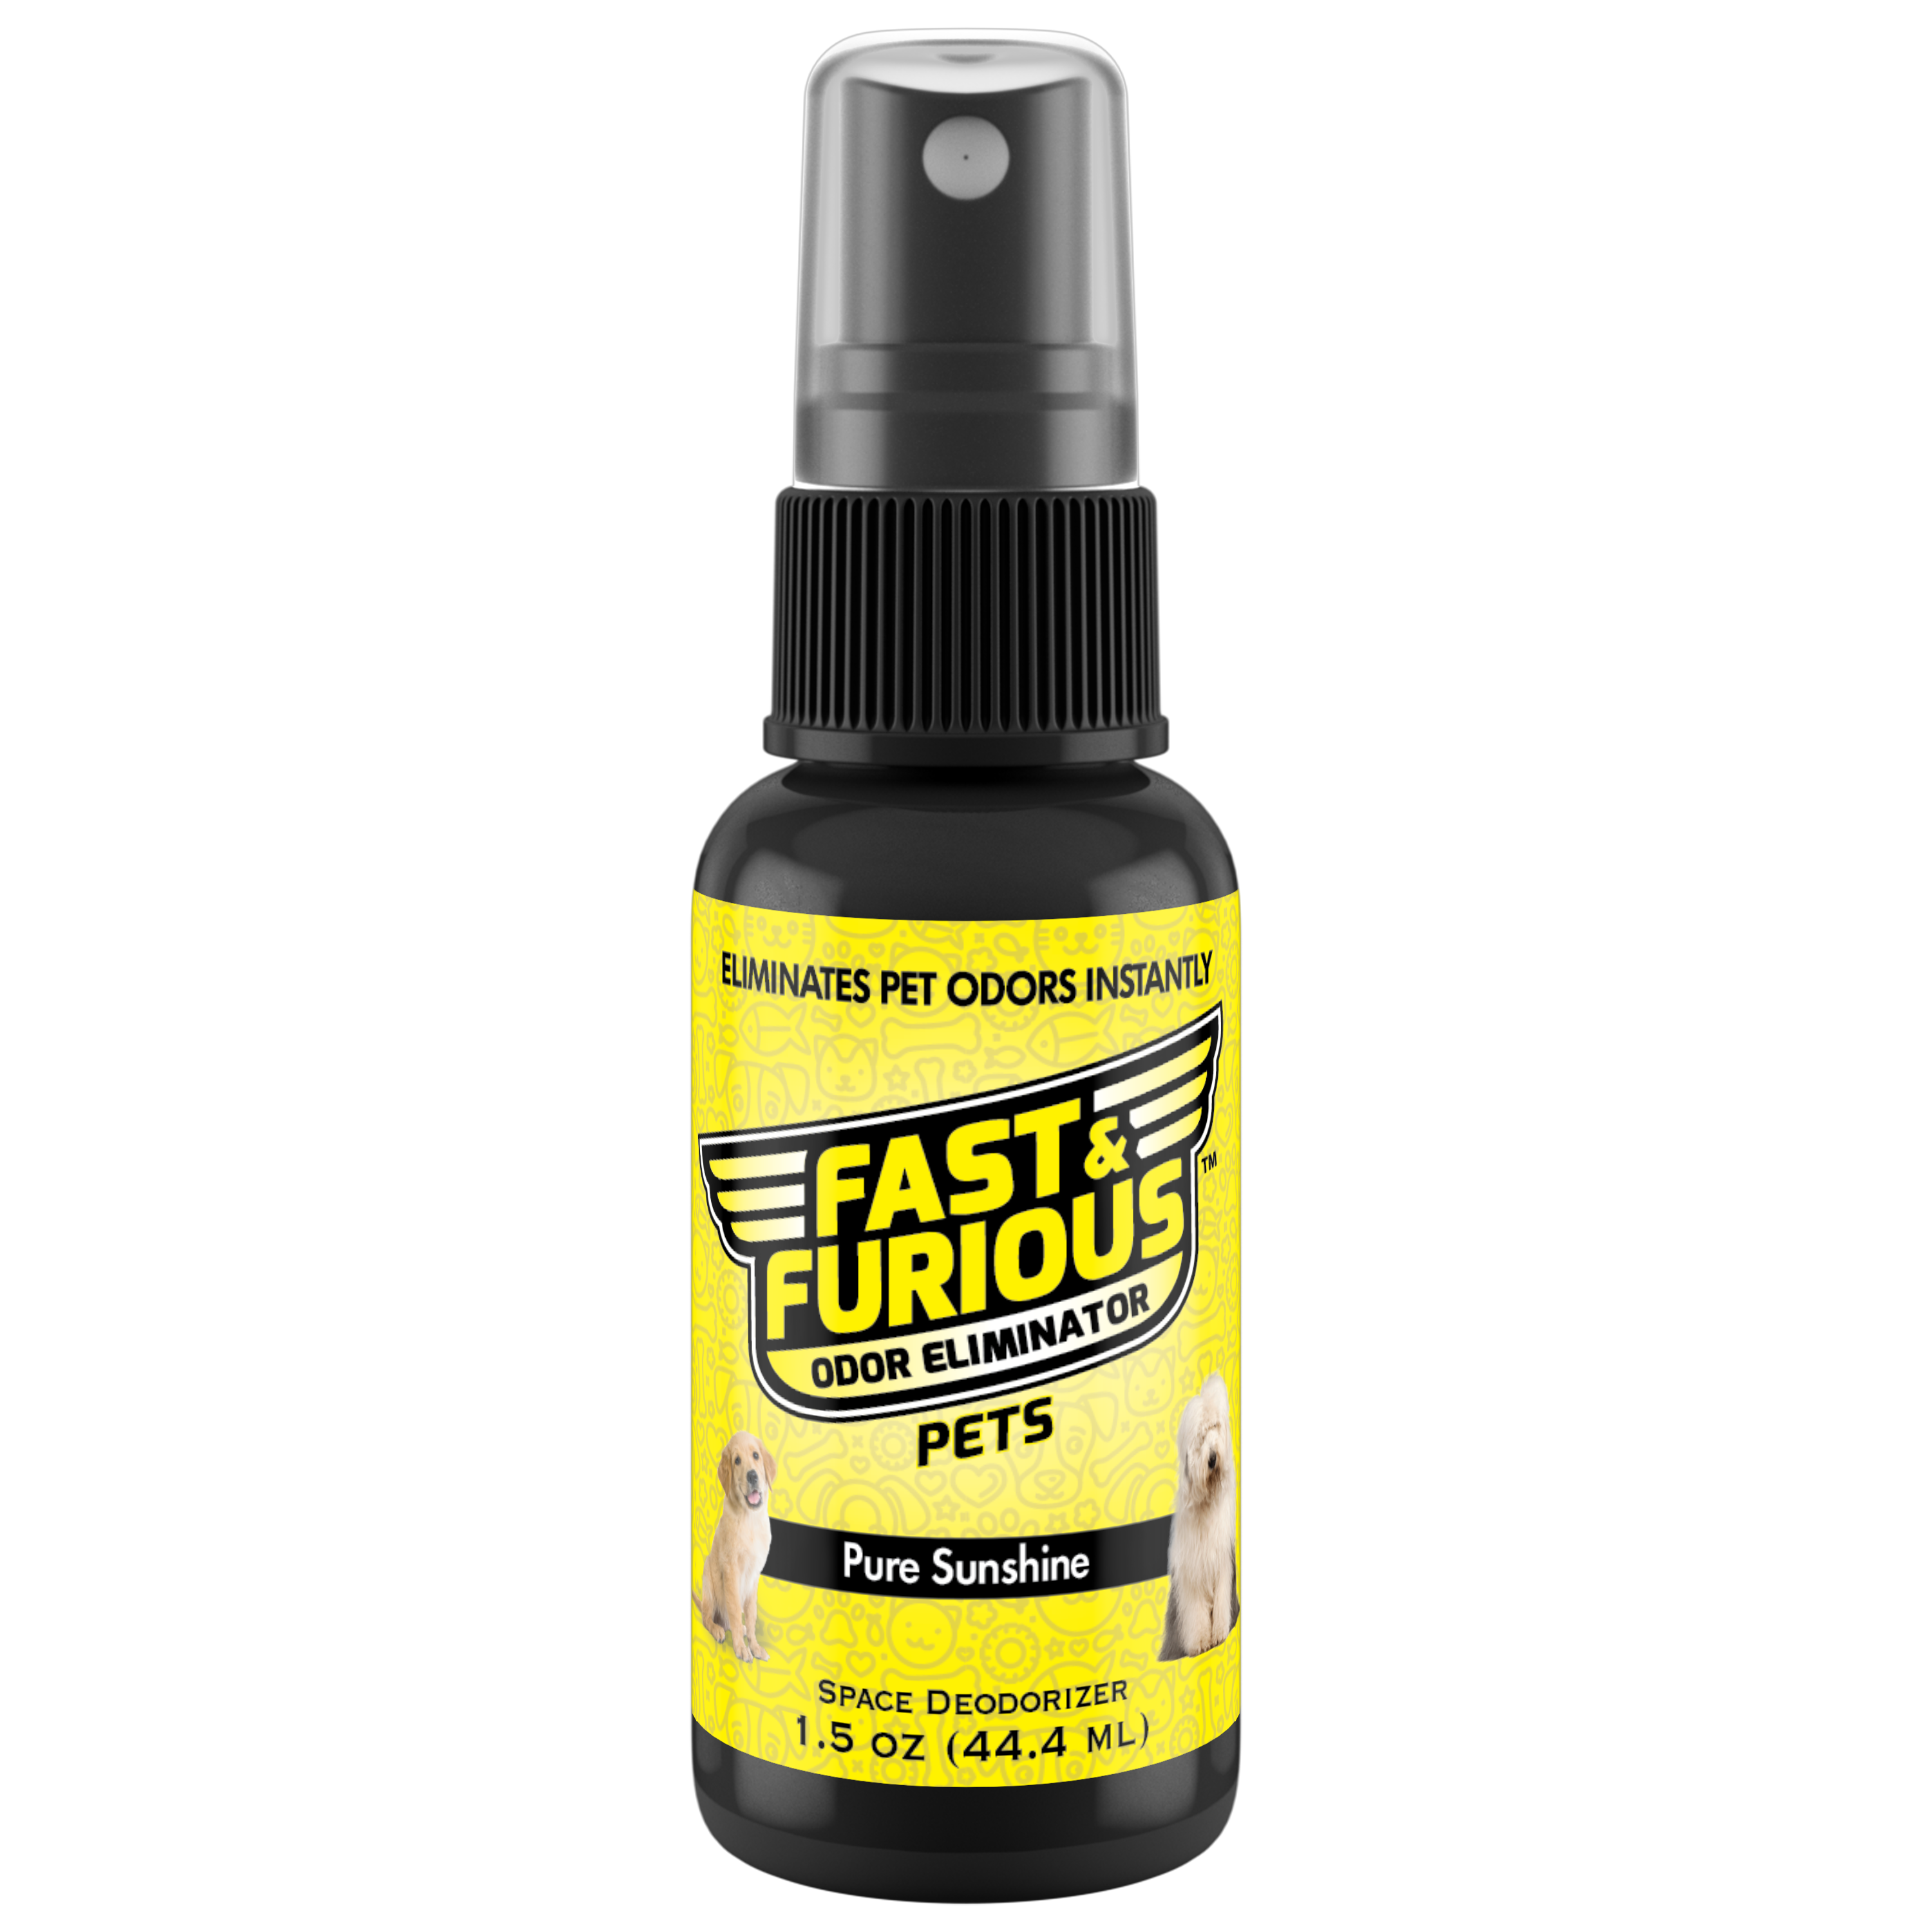 Fast and Furious Pets Odor Eliminator - Pure Sunshine Scent